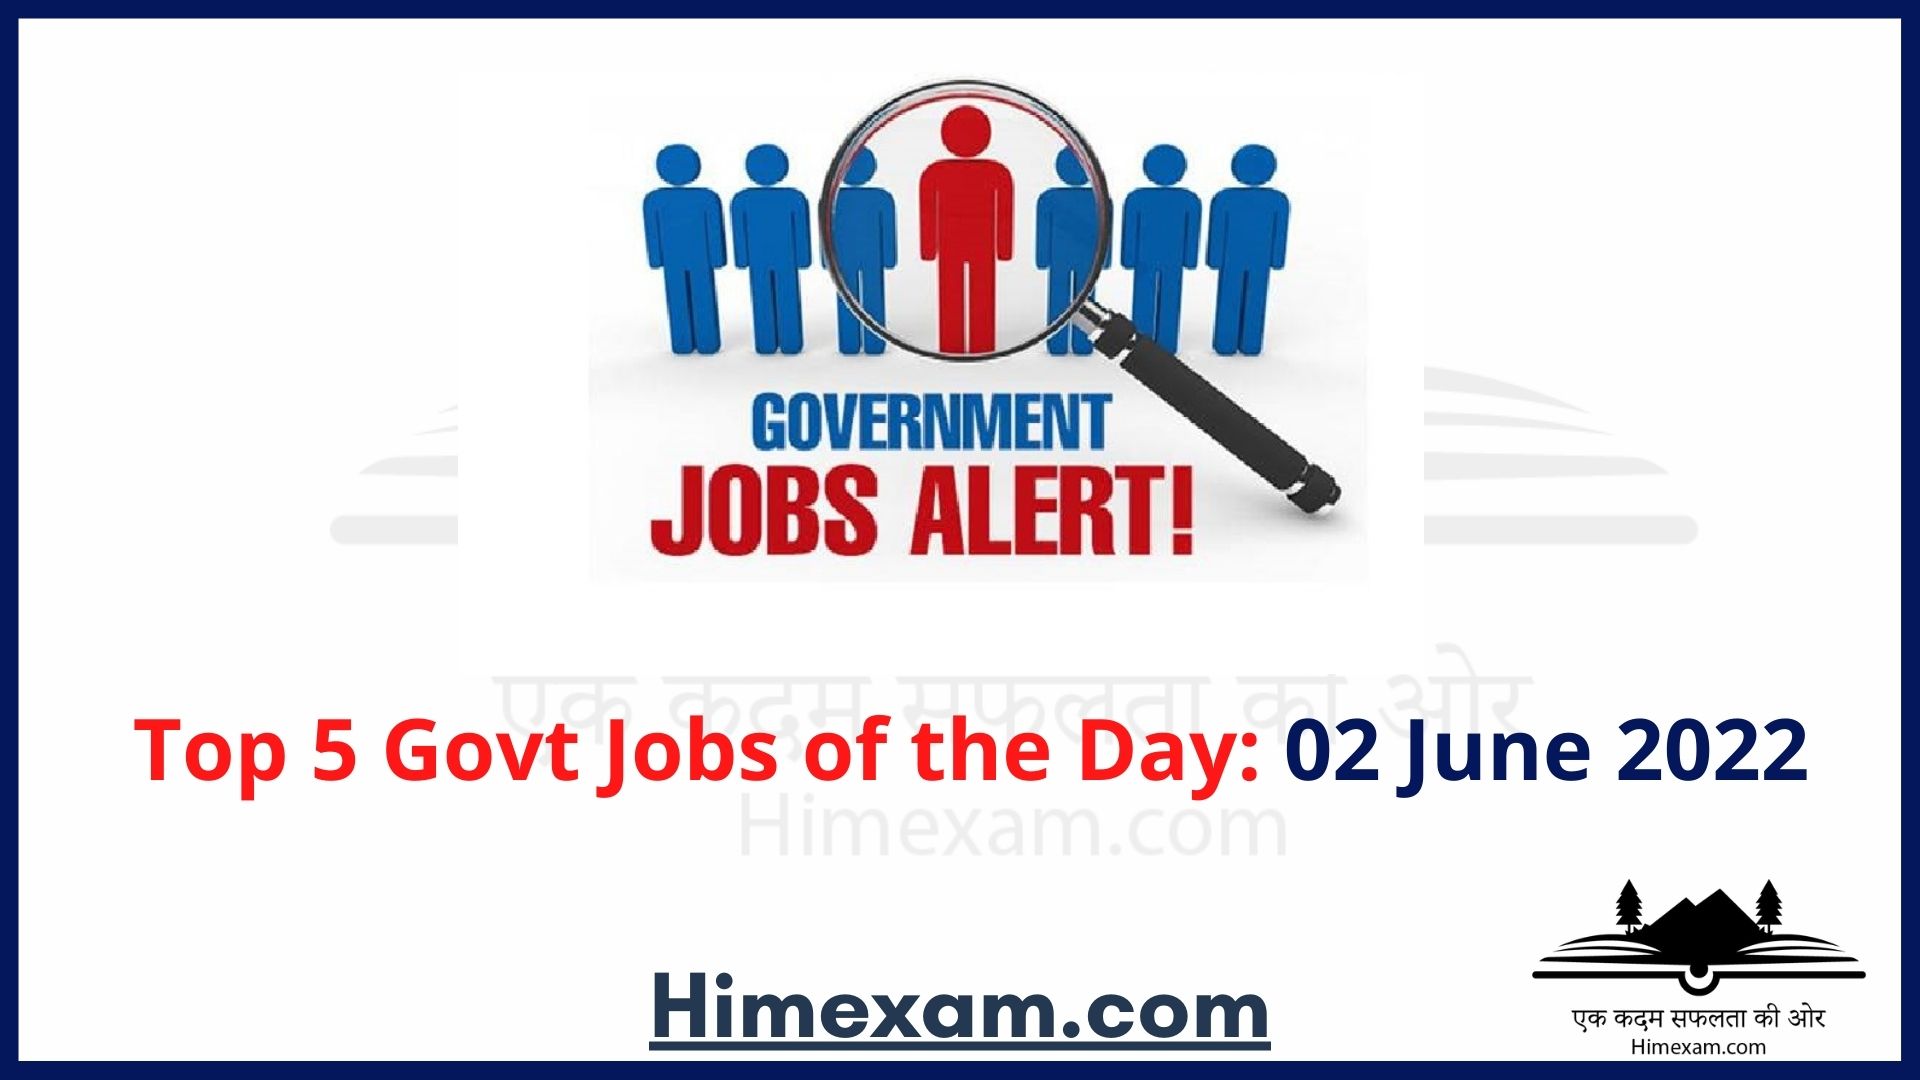 Top 5 Govt Jobs of the Day: 02 June 2022